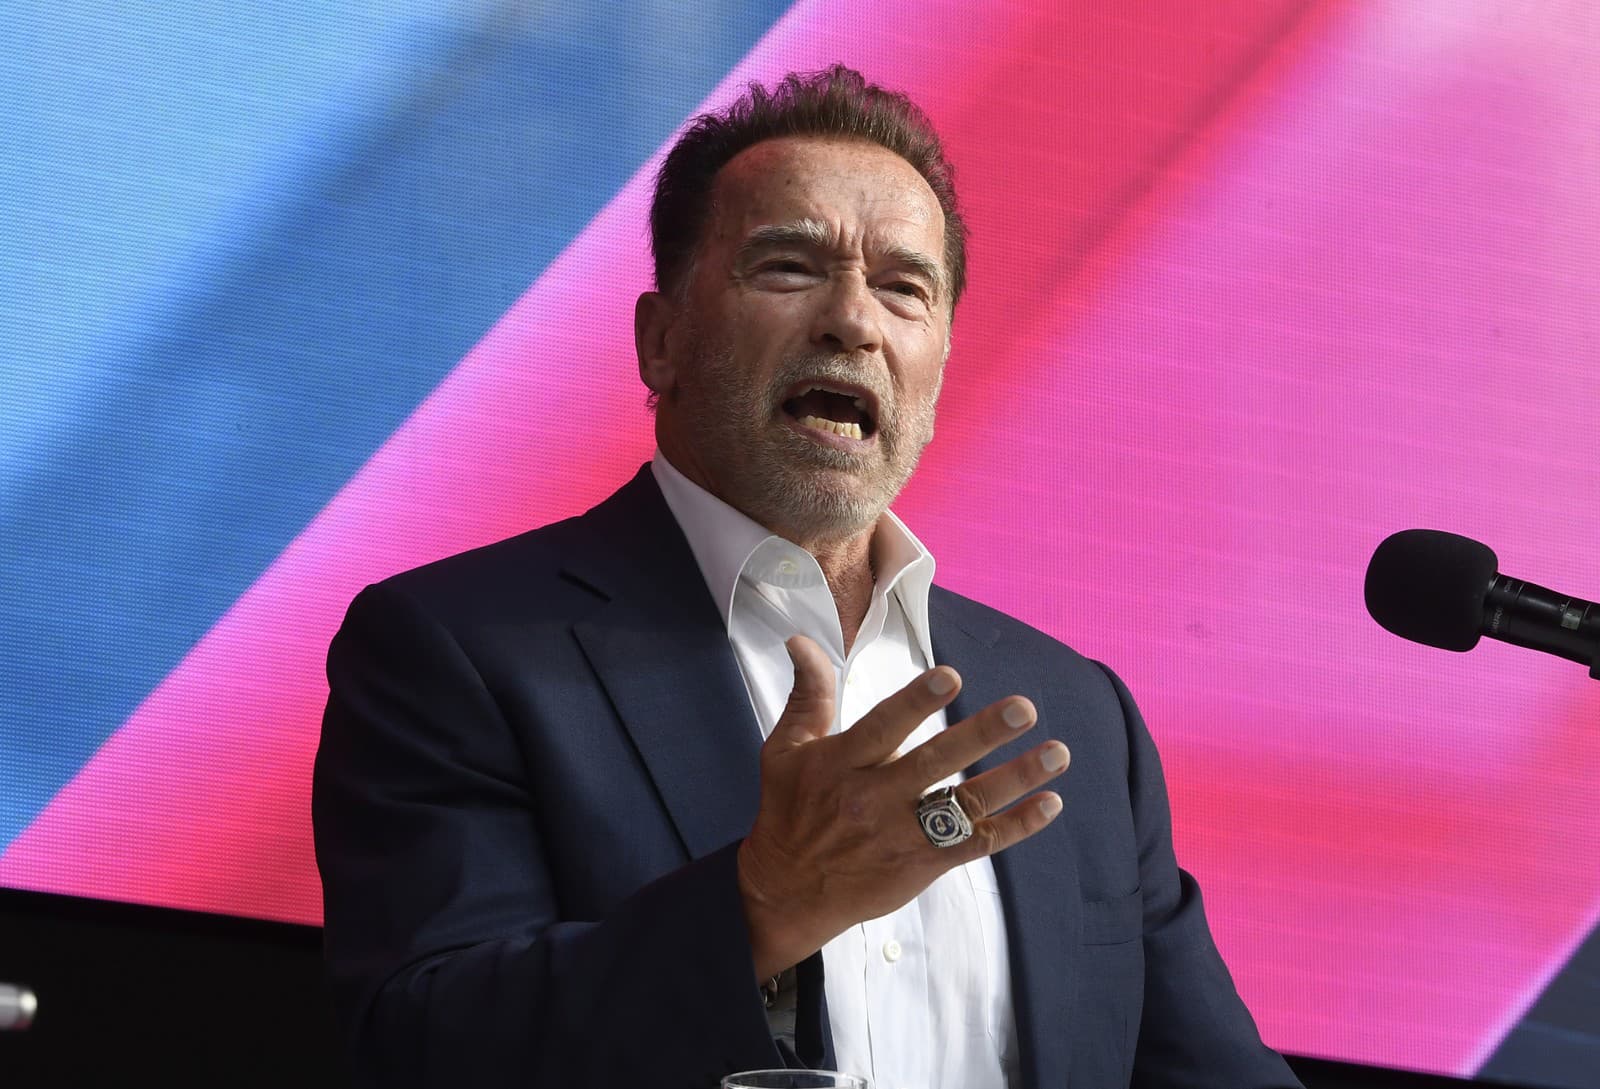 PROBLÉMY hviezdneho Schwarzeneggera: ZADRŽALI